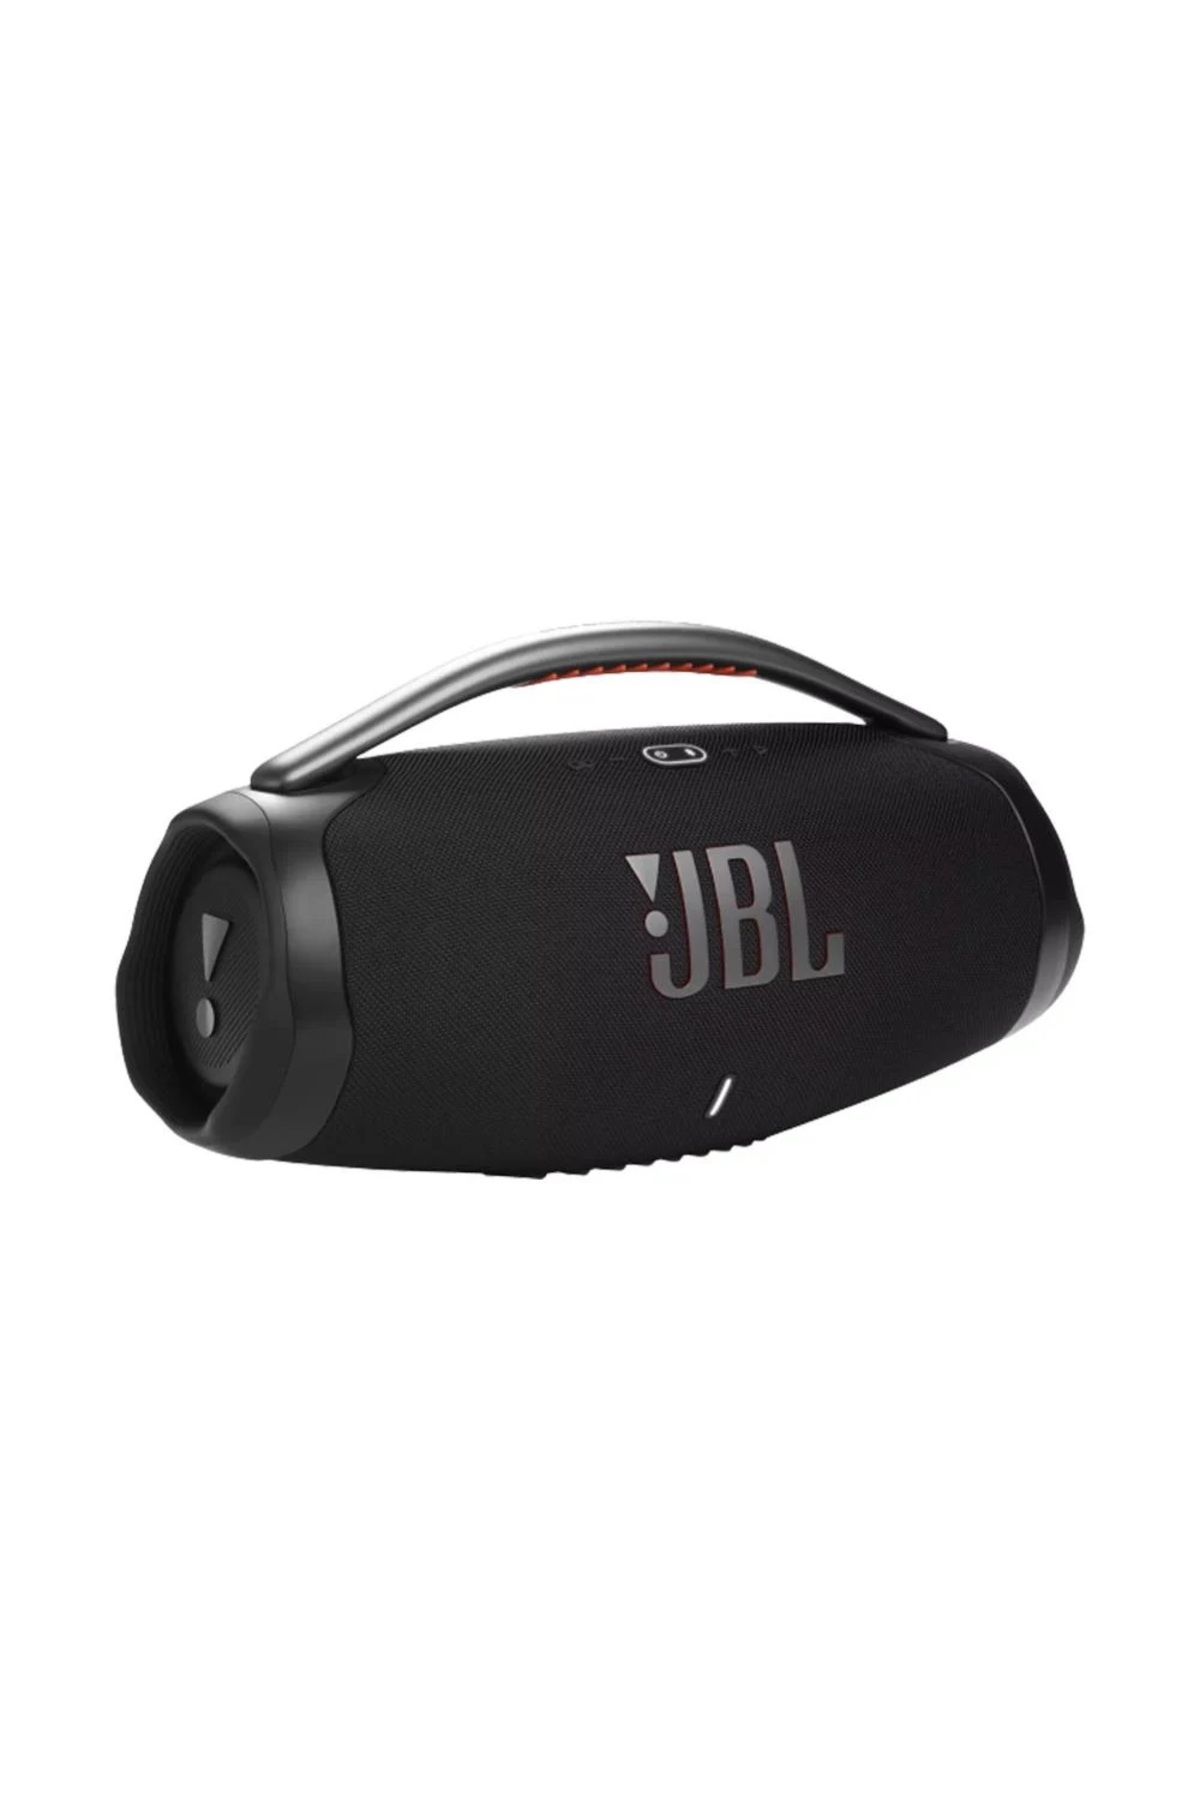 JBL Boombox 3 Su ve Toza Dayanıklı 24 Saat Çalma Süresi Bluetooth Hoparlör IP67 Siyah